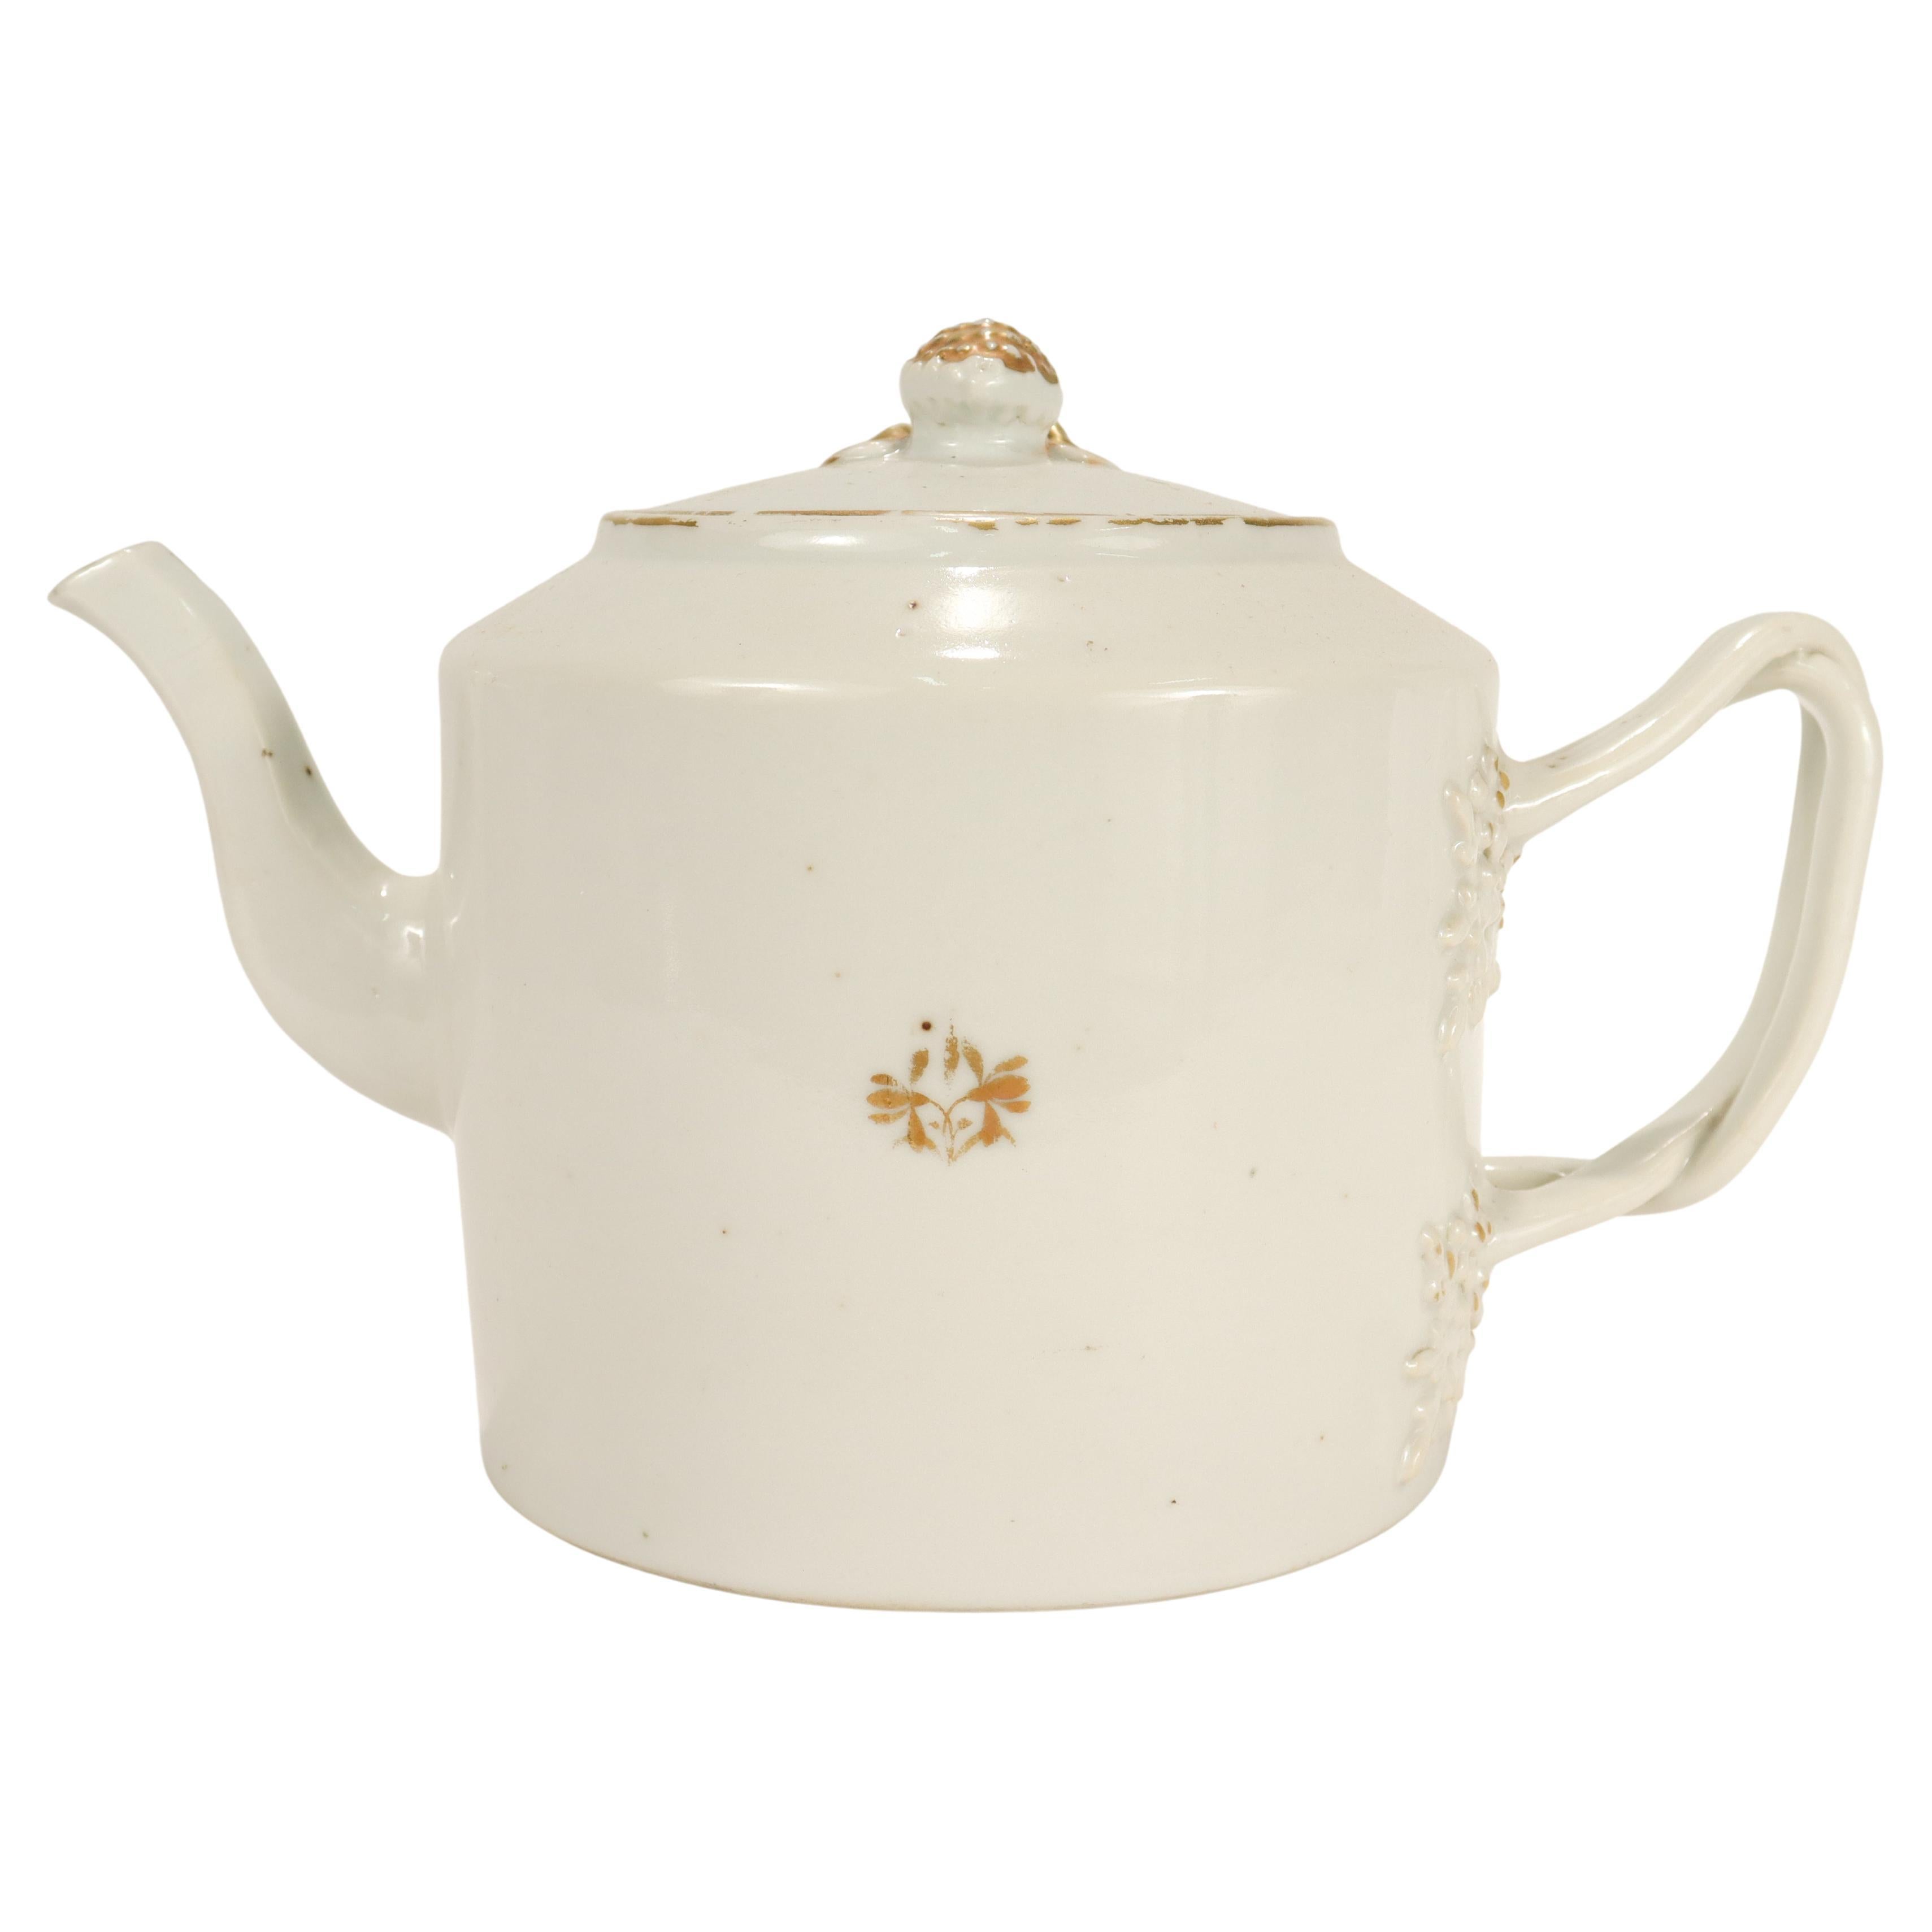 Antique Chinese Export Porcelain Teapot